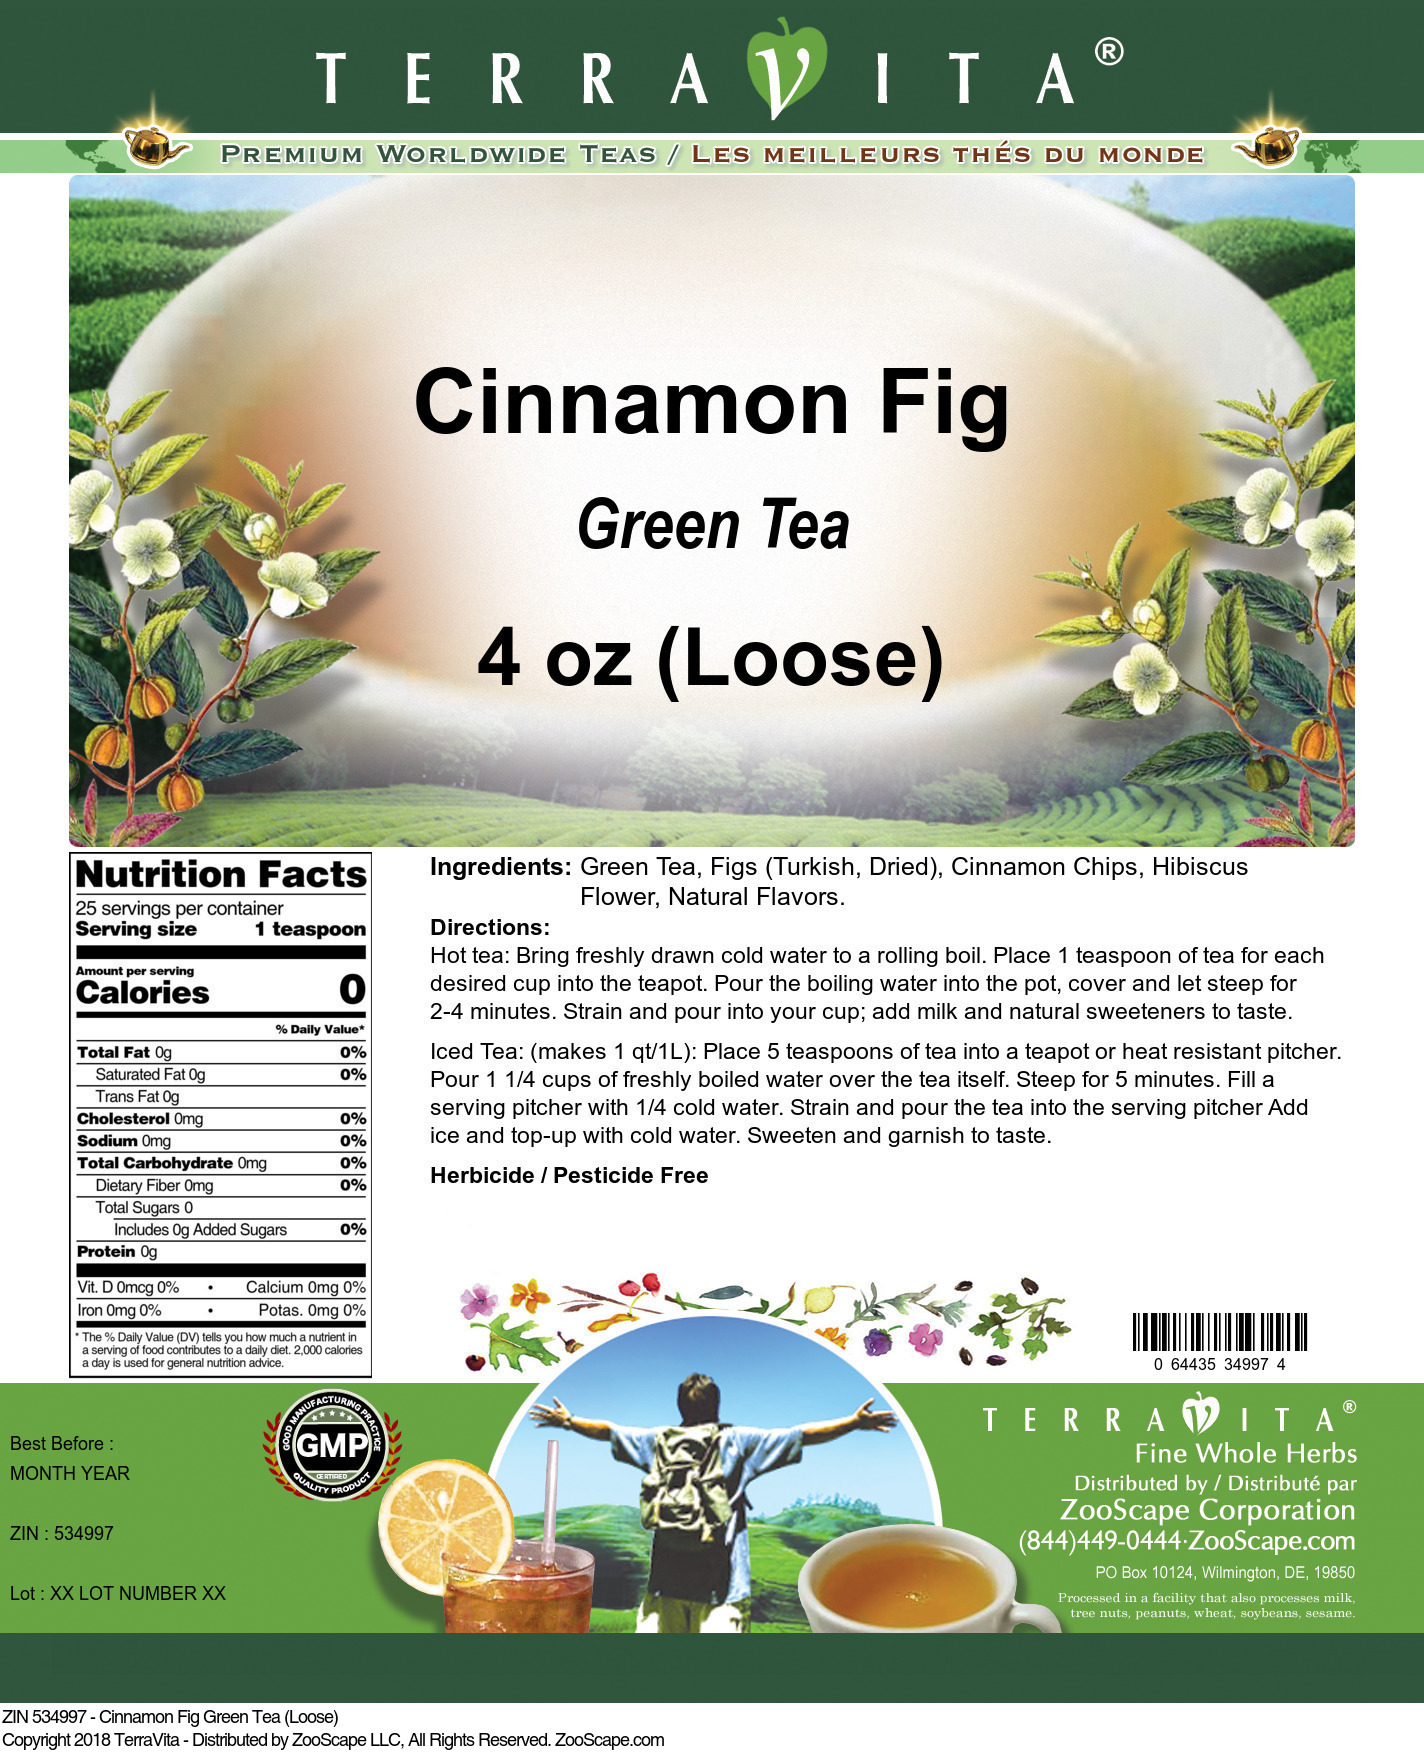 Cinnamon Fig Green Tea (Loose) - Label